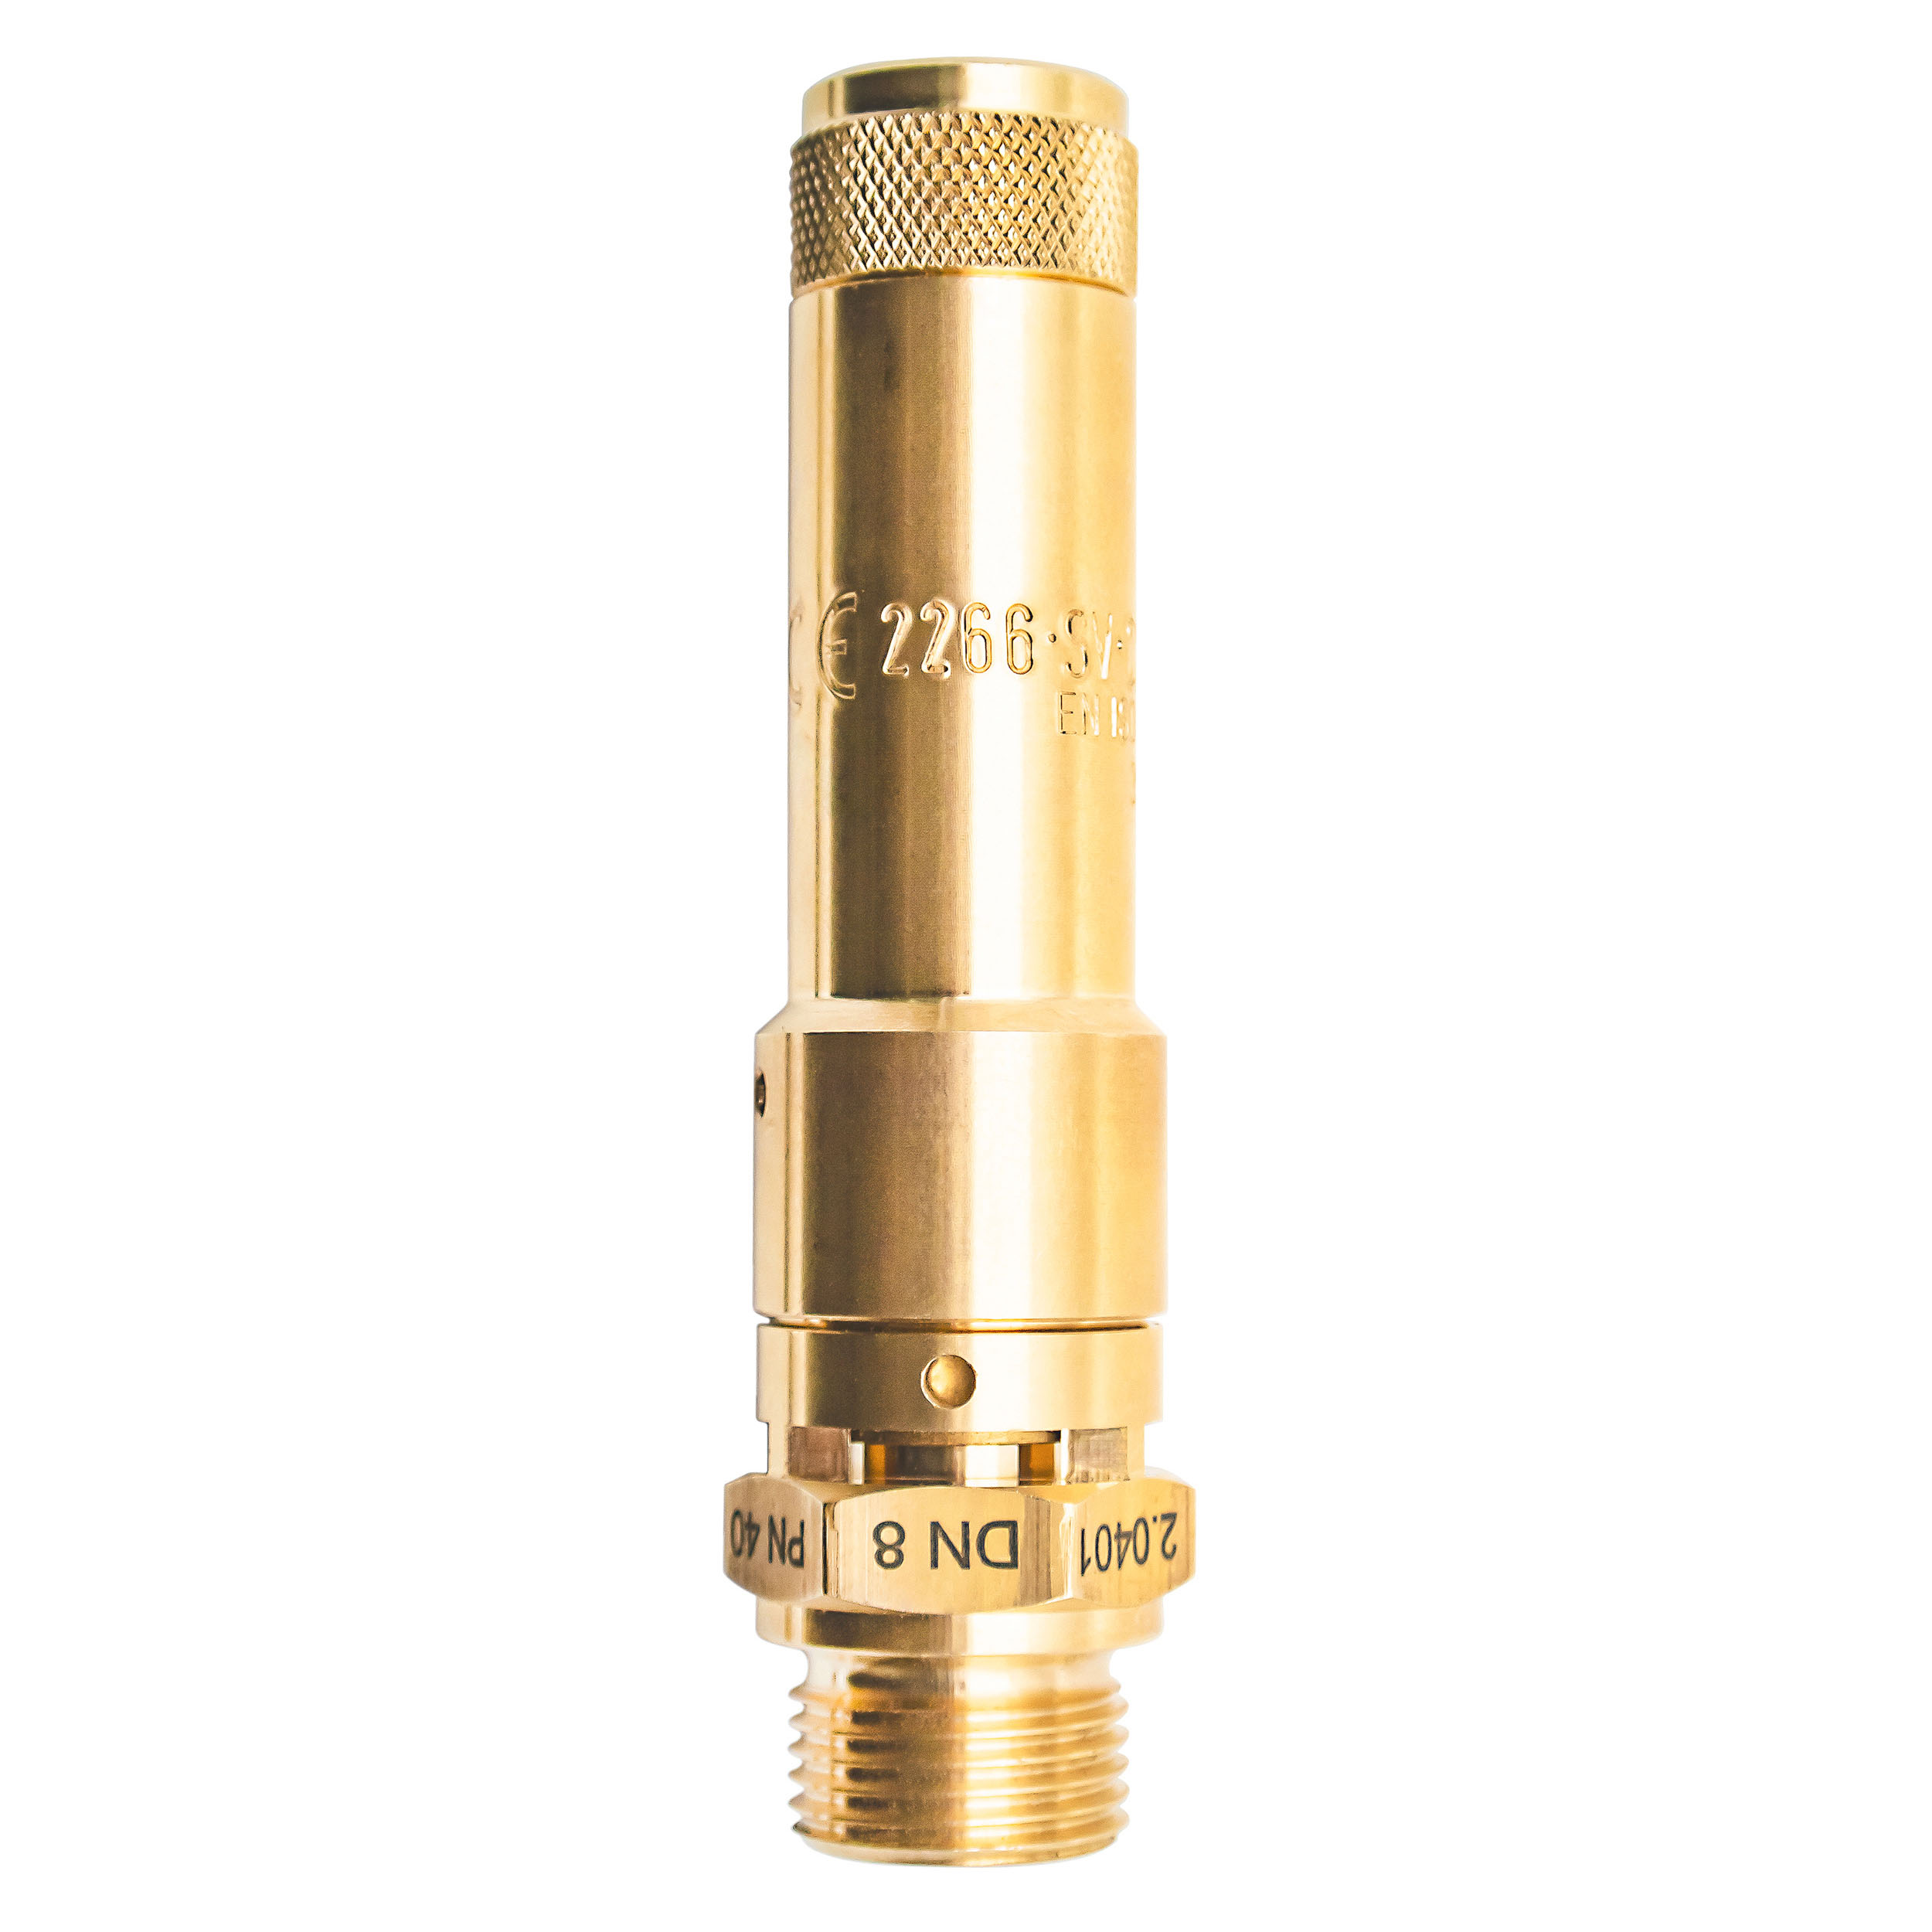 Savety valve component tested DN 8, G½, set pressure: 14.3 bar (207,35 psi)